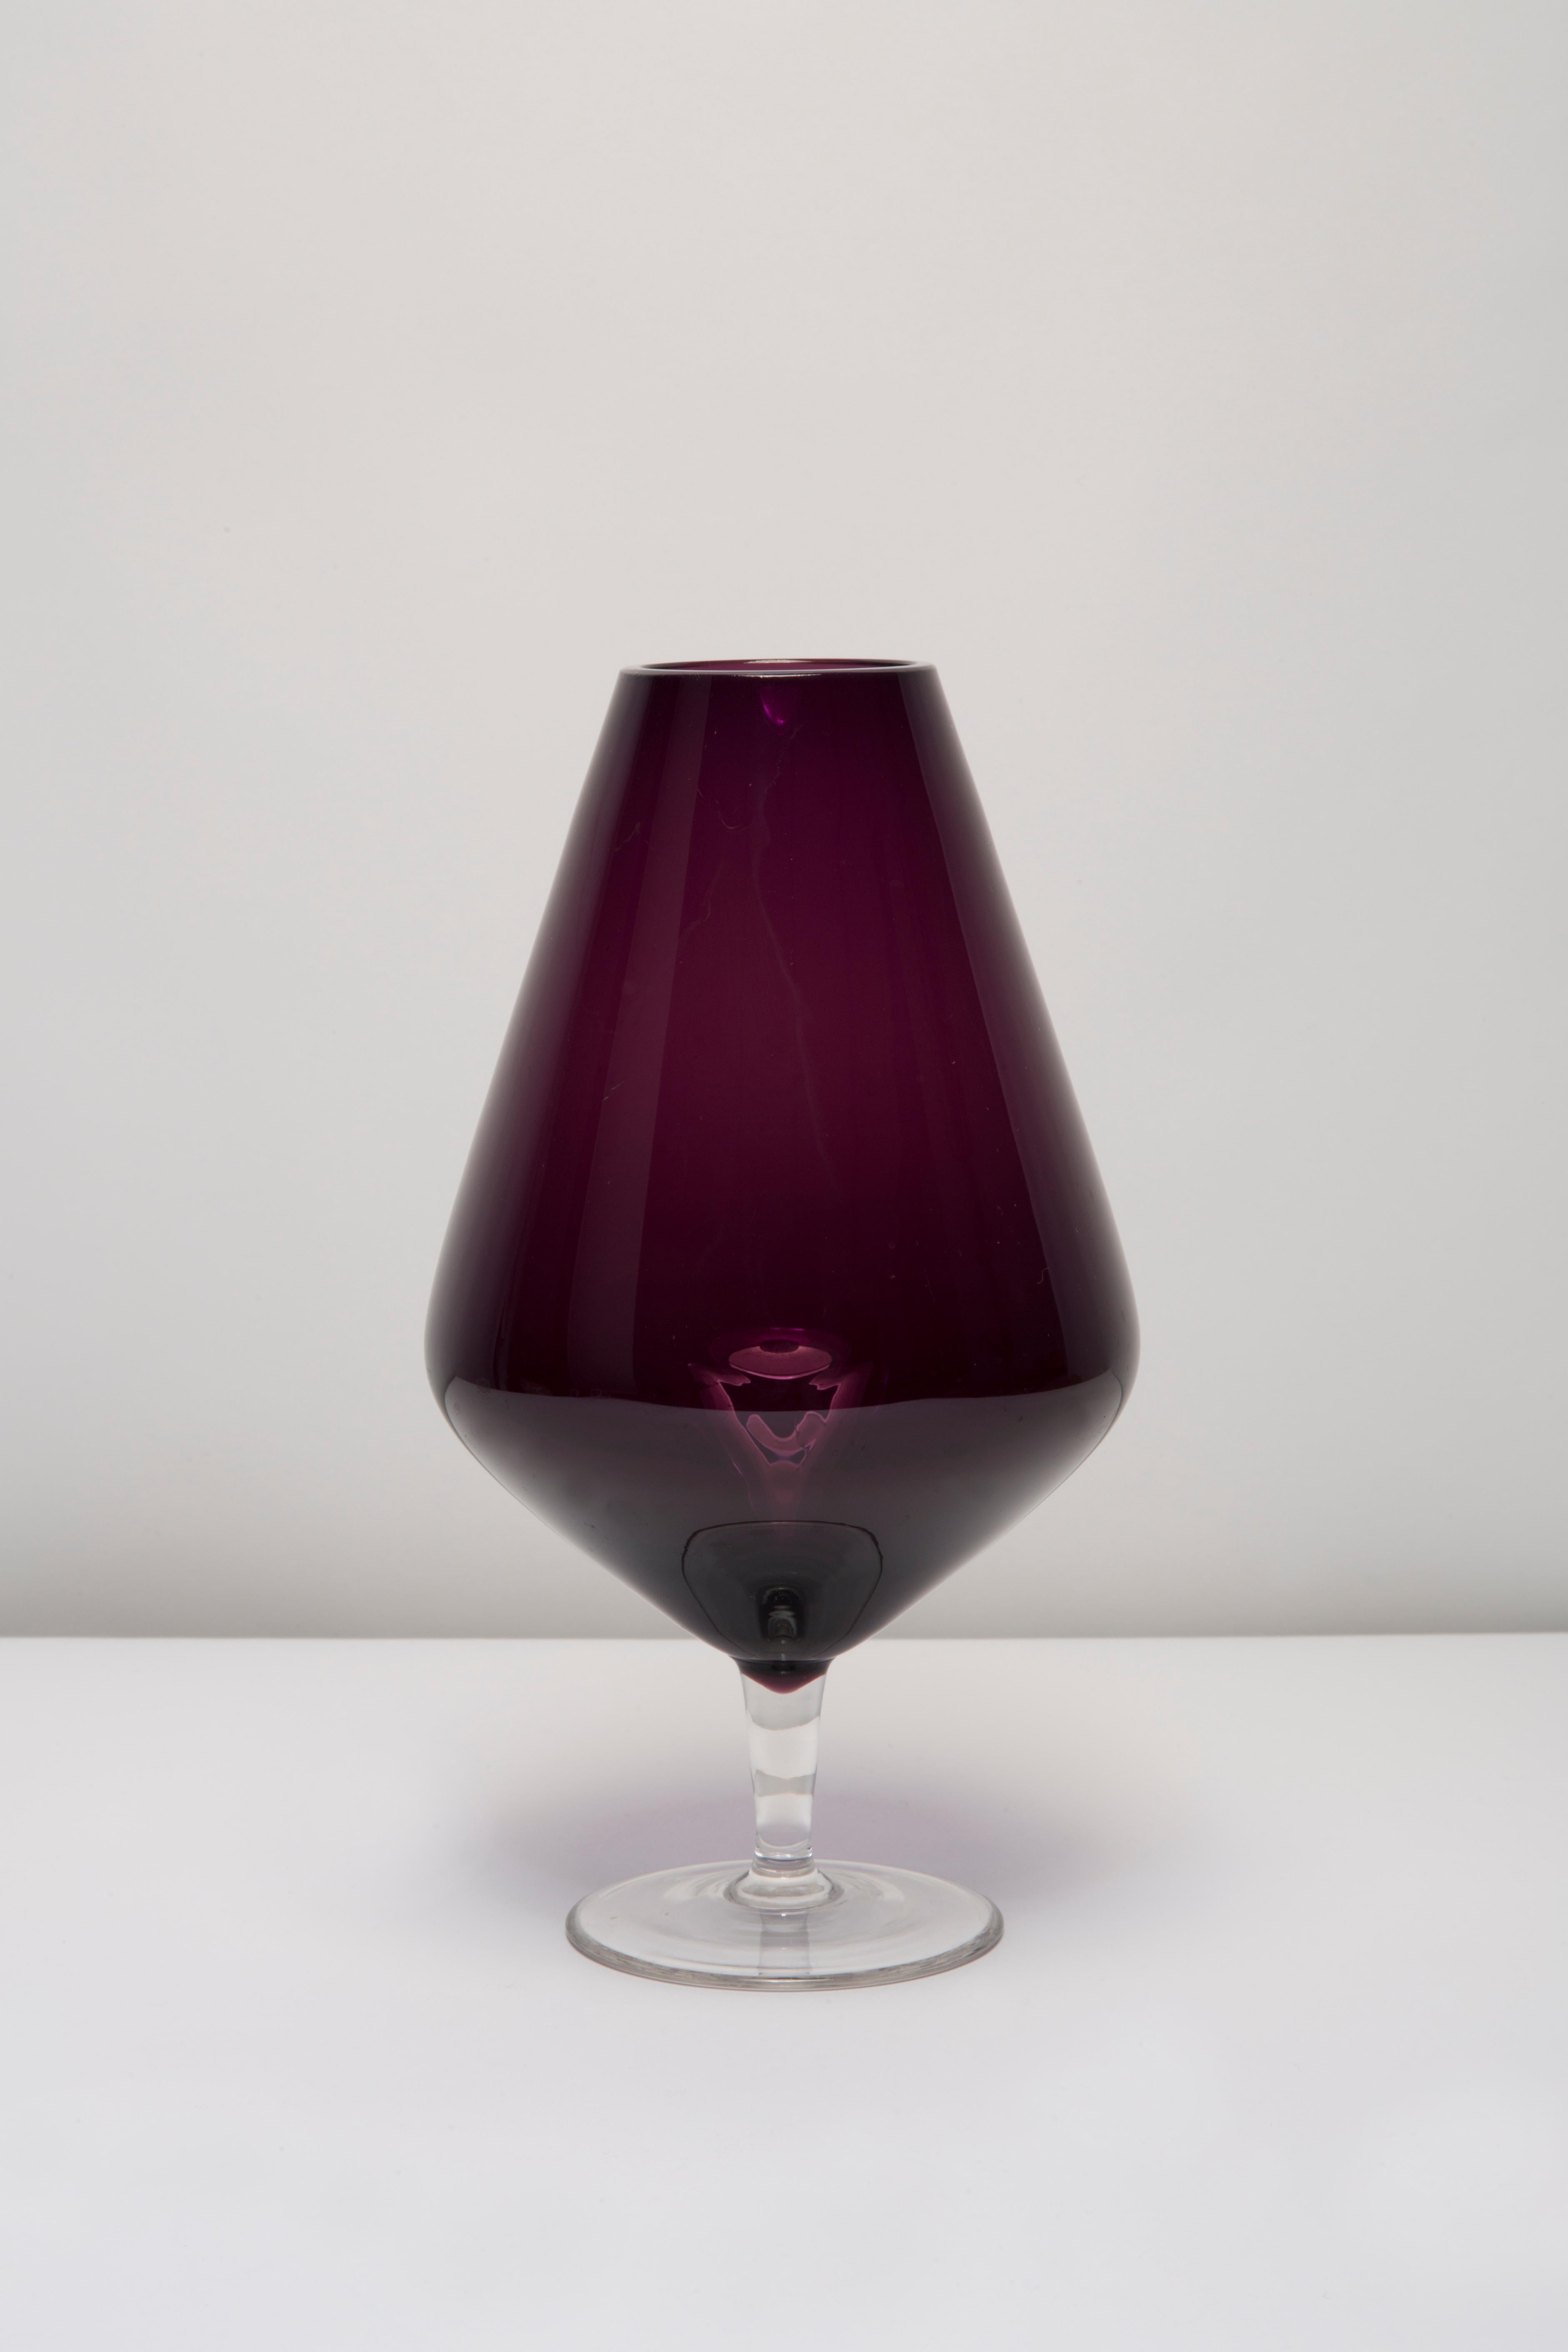 Glass Mid Century Vintage Purple Vase, Europe, 1960s For Sale